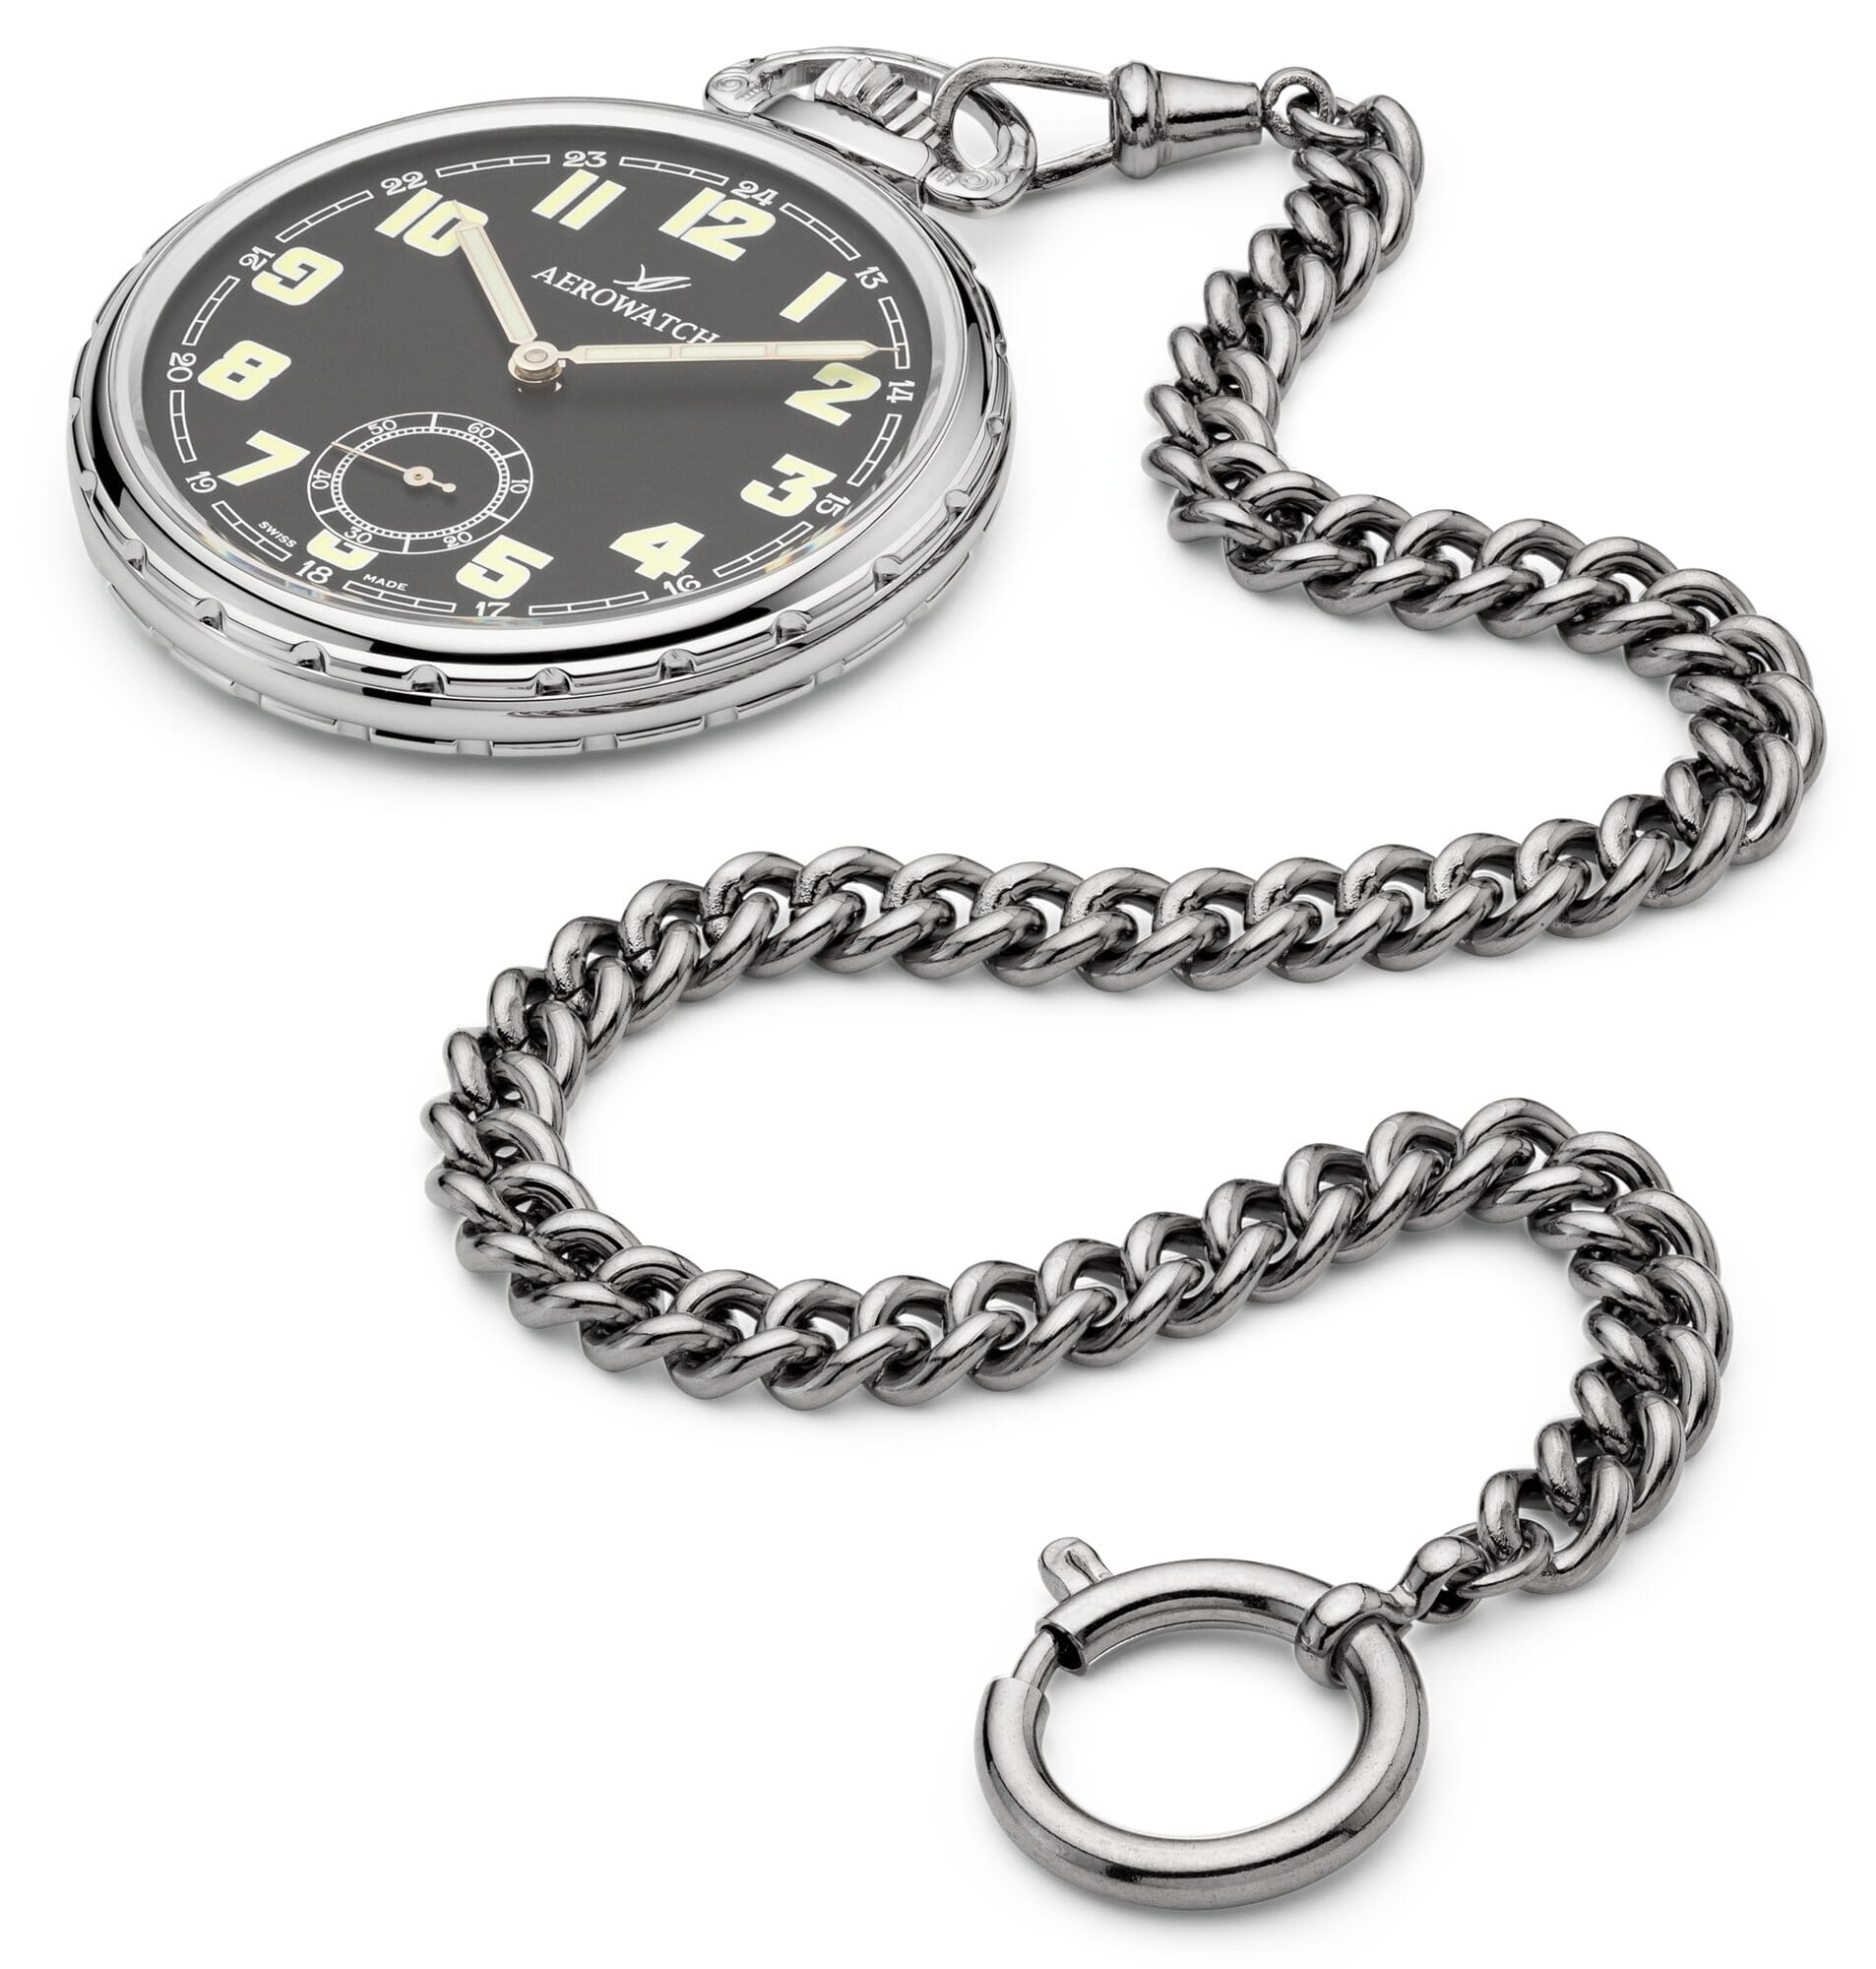 Gold pocket watch chain - Rocks and Clocks-hkpdtq2012.edu.vn